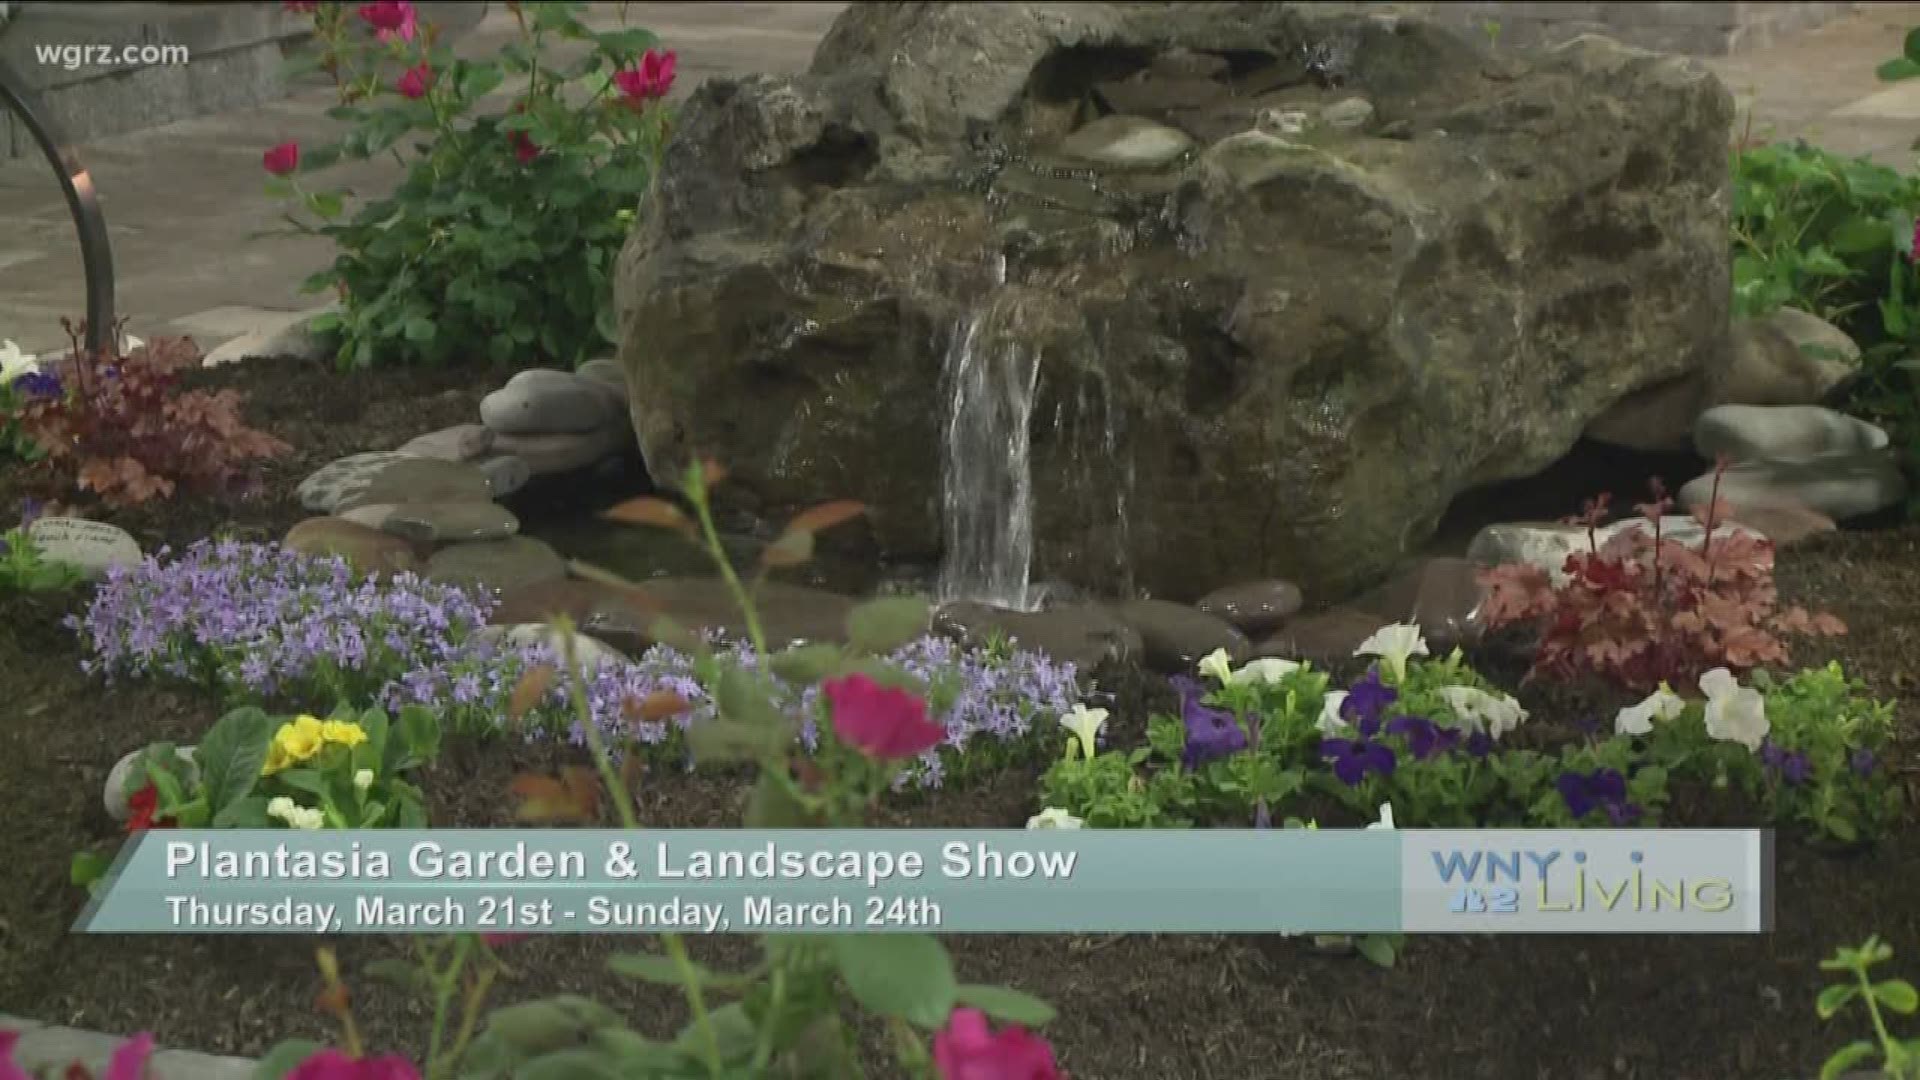 WNY Living - March 16 - Plantasia Garden & Landscape Show (SPONSORED CONTENT)